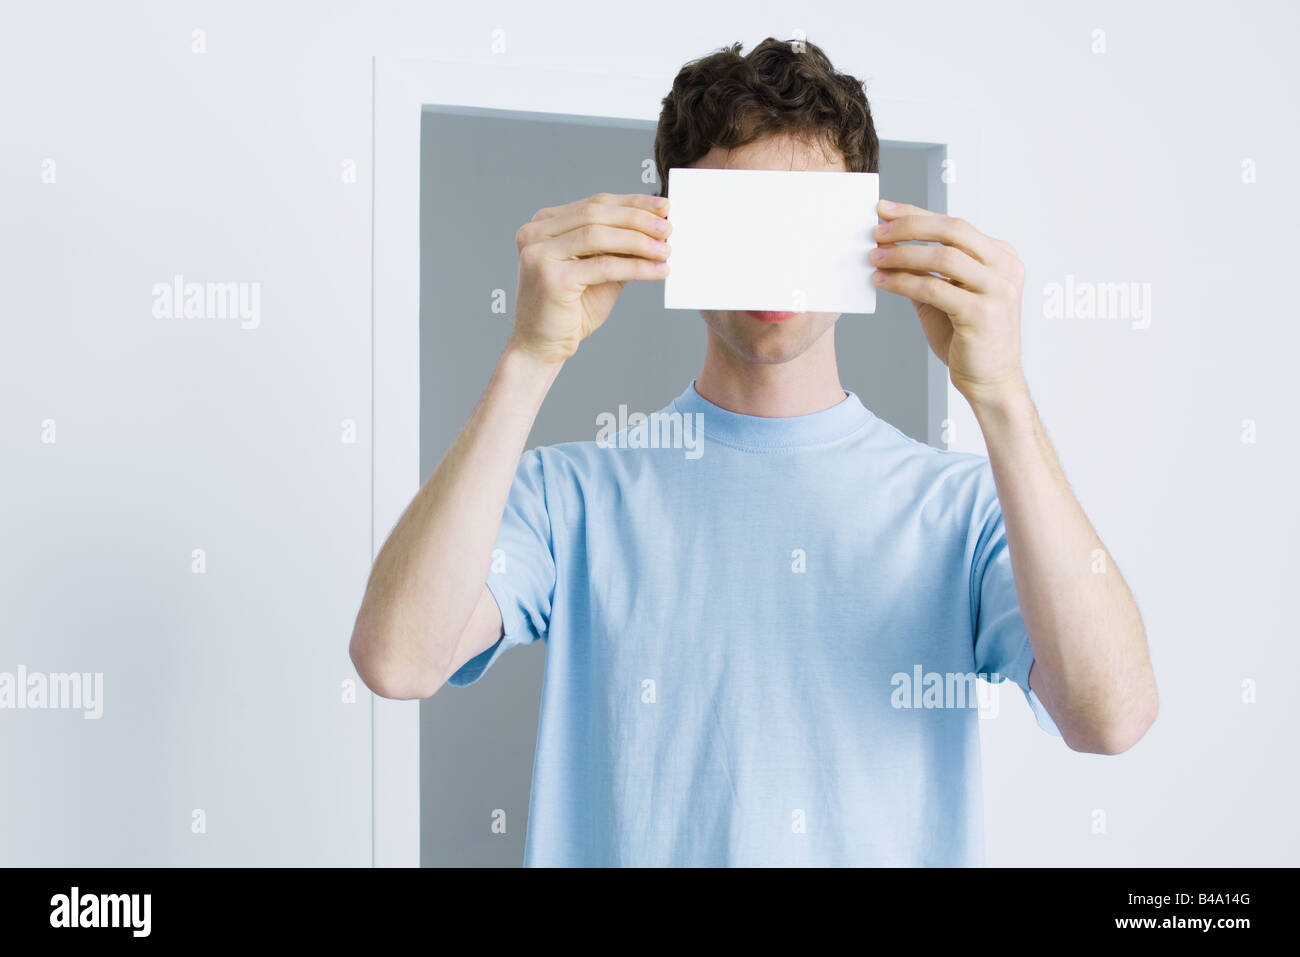 Young man holding blank card index en face de visage Banque D'Images